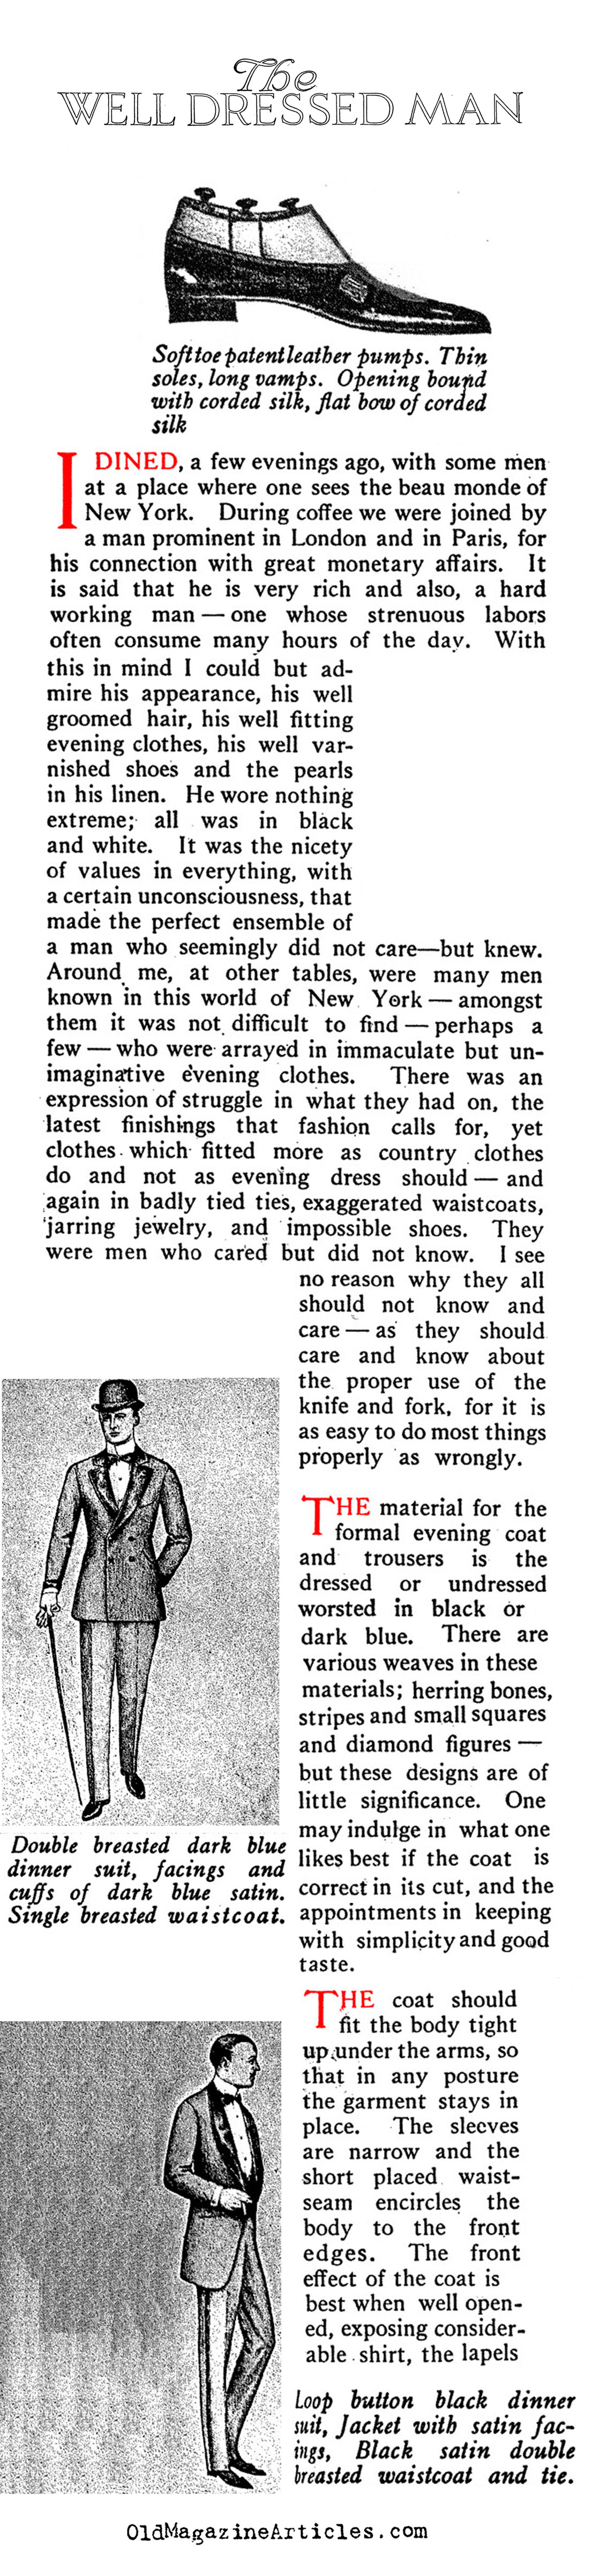 Sensible Rules for Men's Evening Clothes  (Vanity Fair Magazine, 1913)